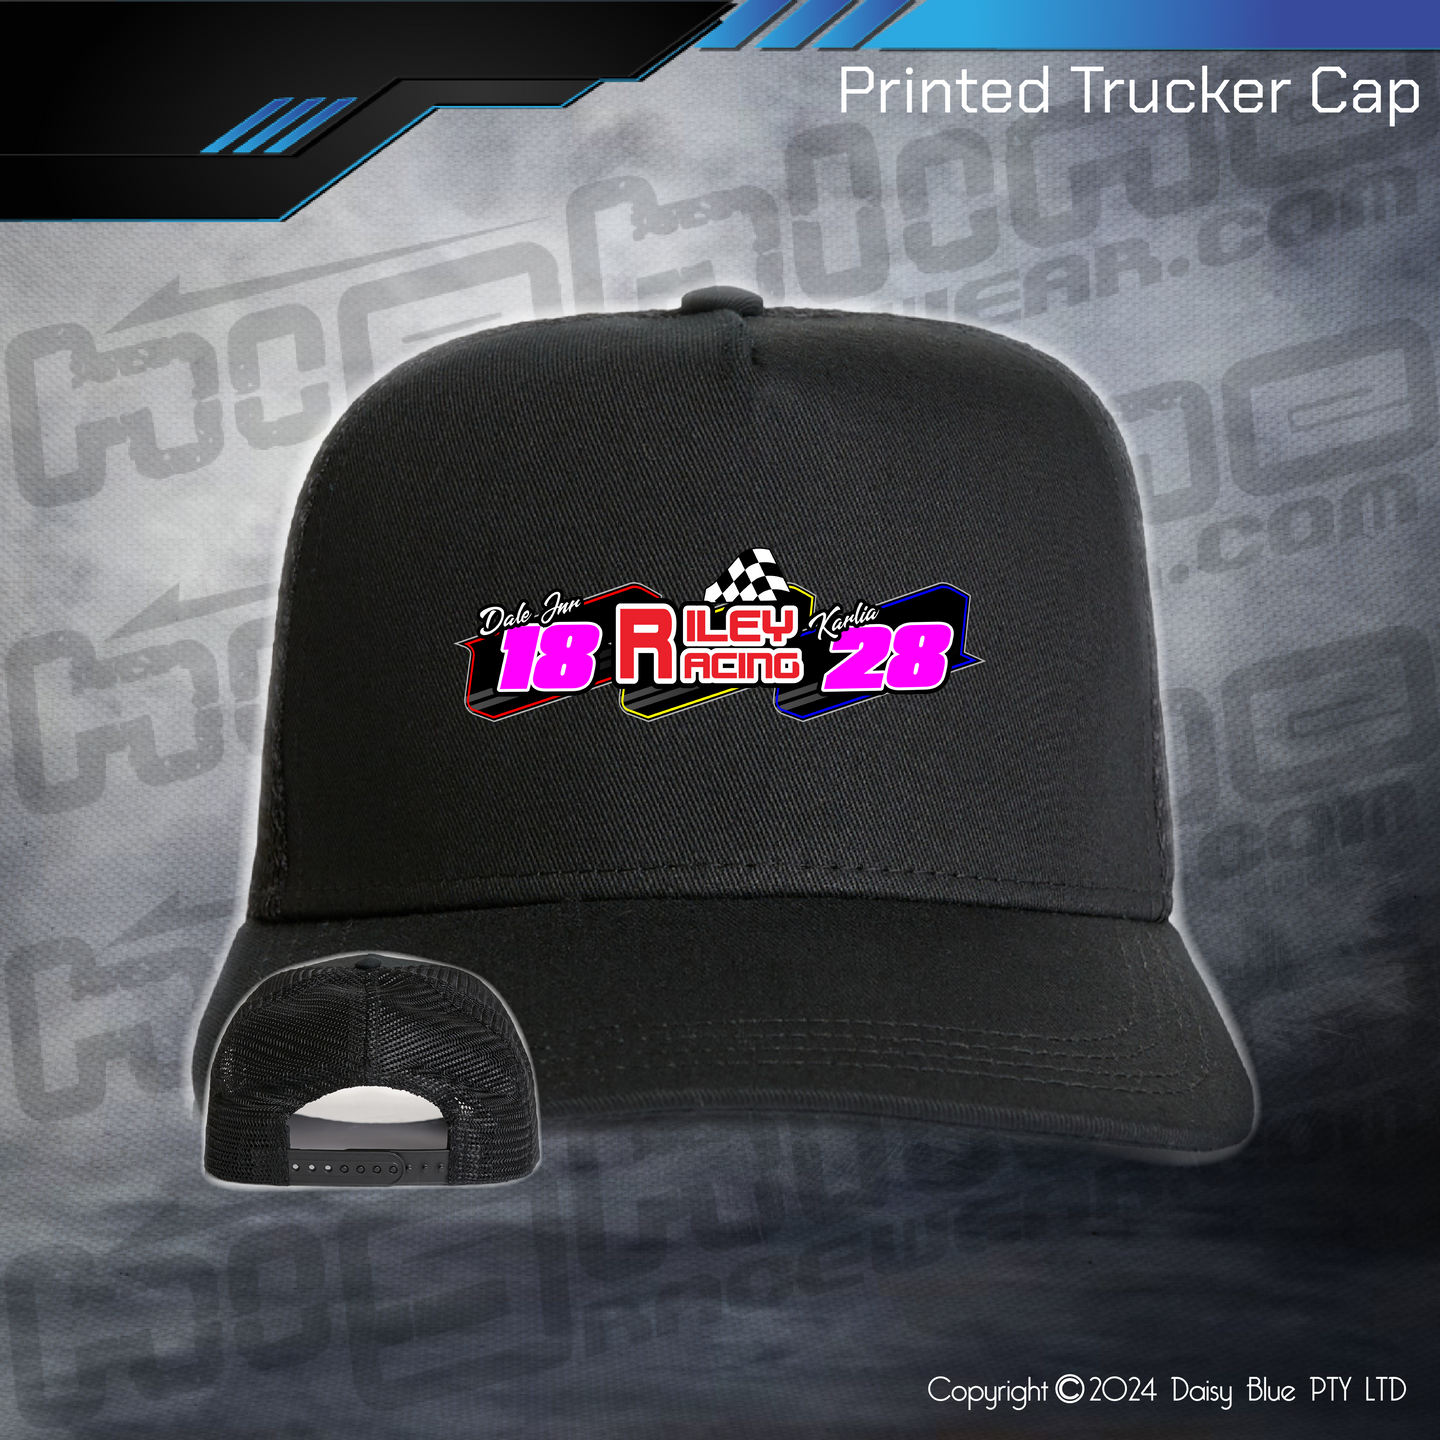 Printed Trucker Cap - Riley Racing